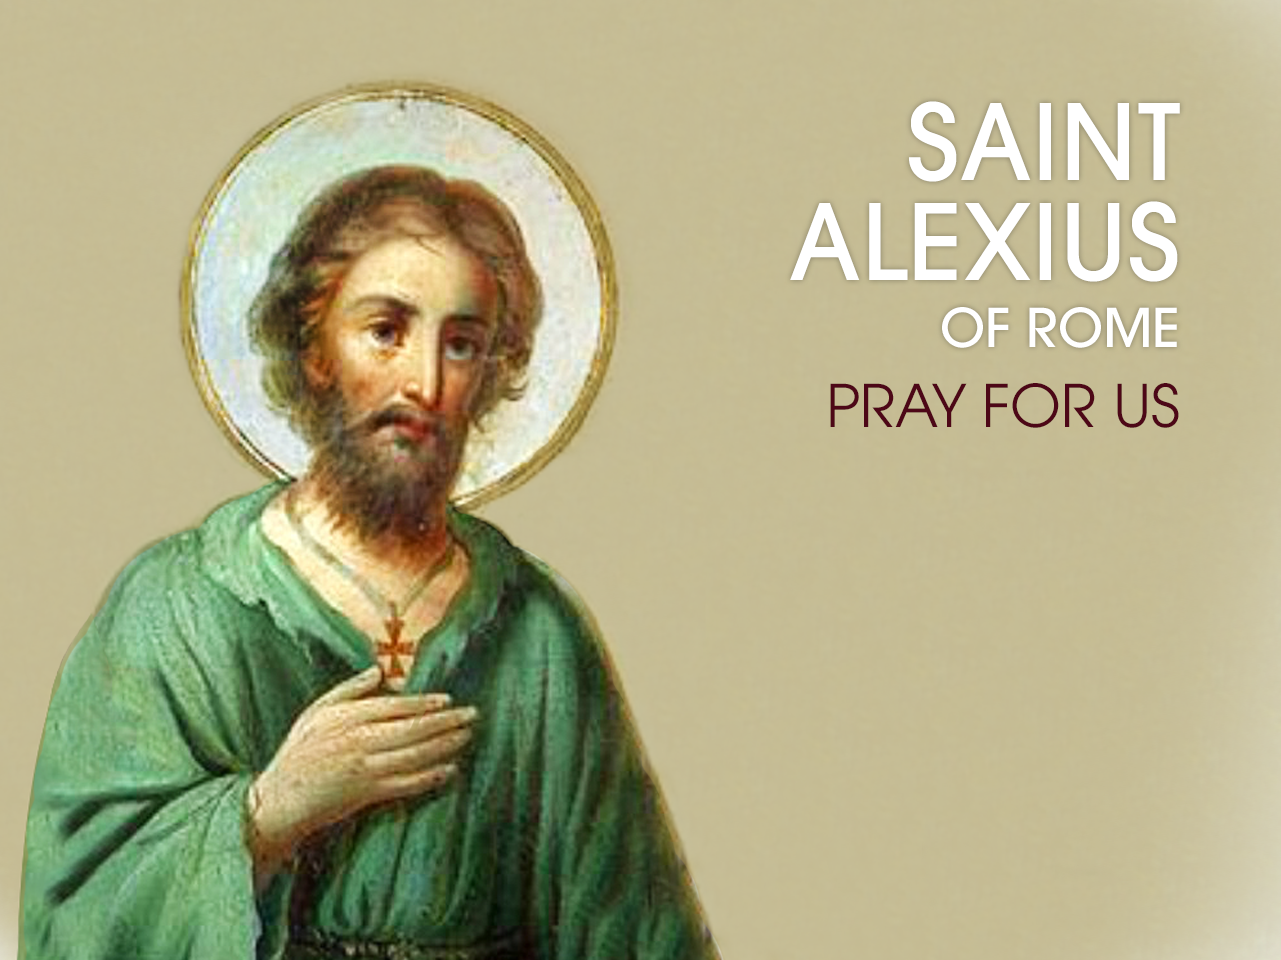 St. Alexius of Rome